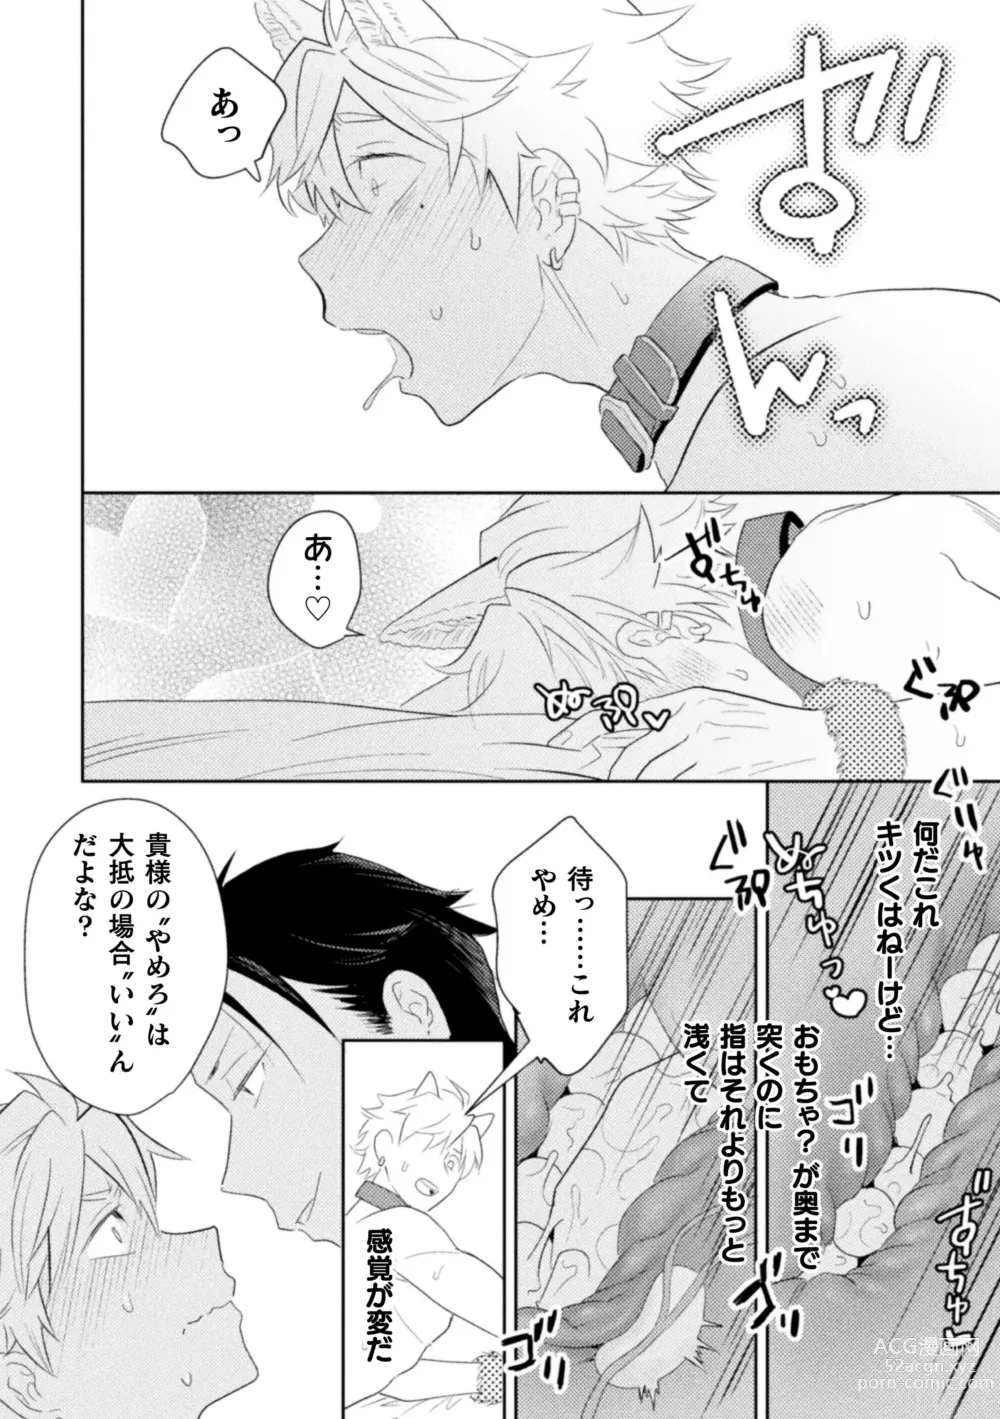 Page 10 of manga Zekkai Rougoku 5 Eien no Rougoku Zenpen